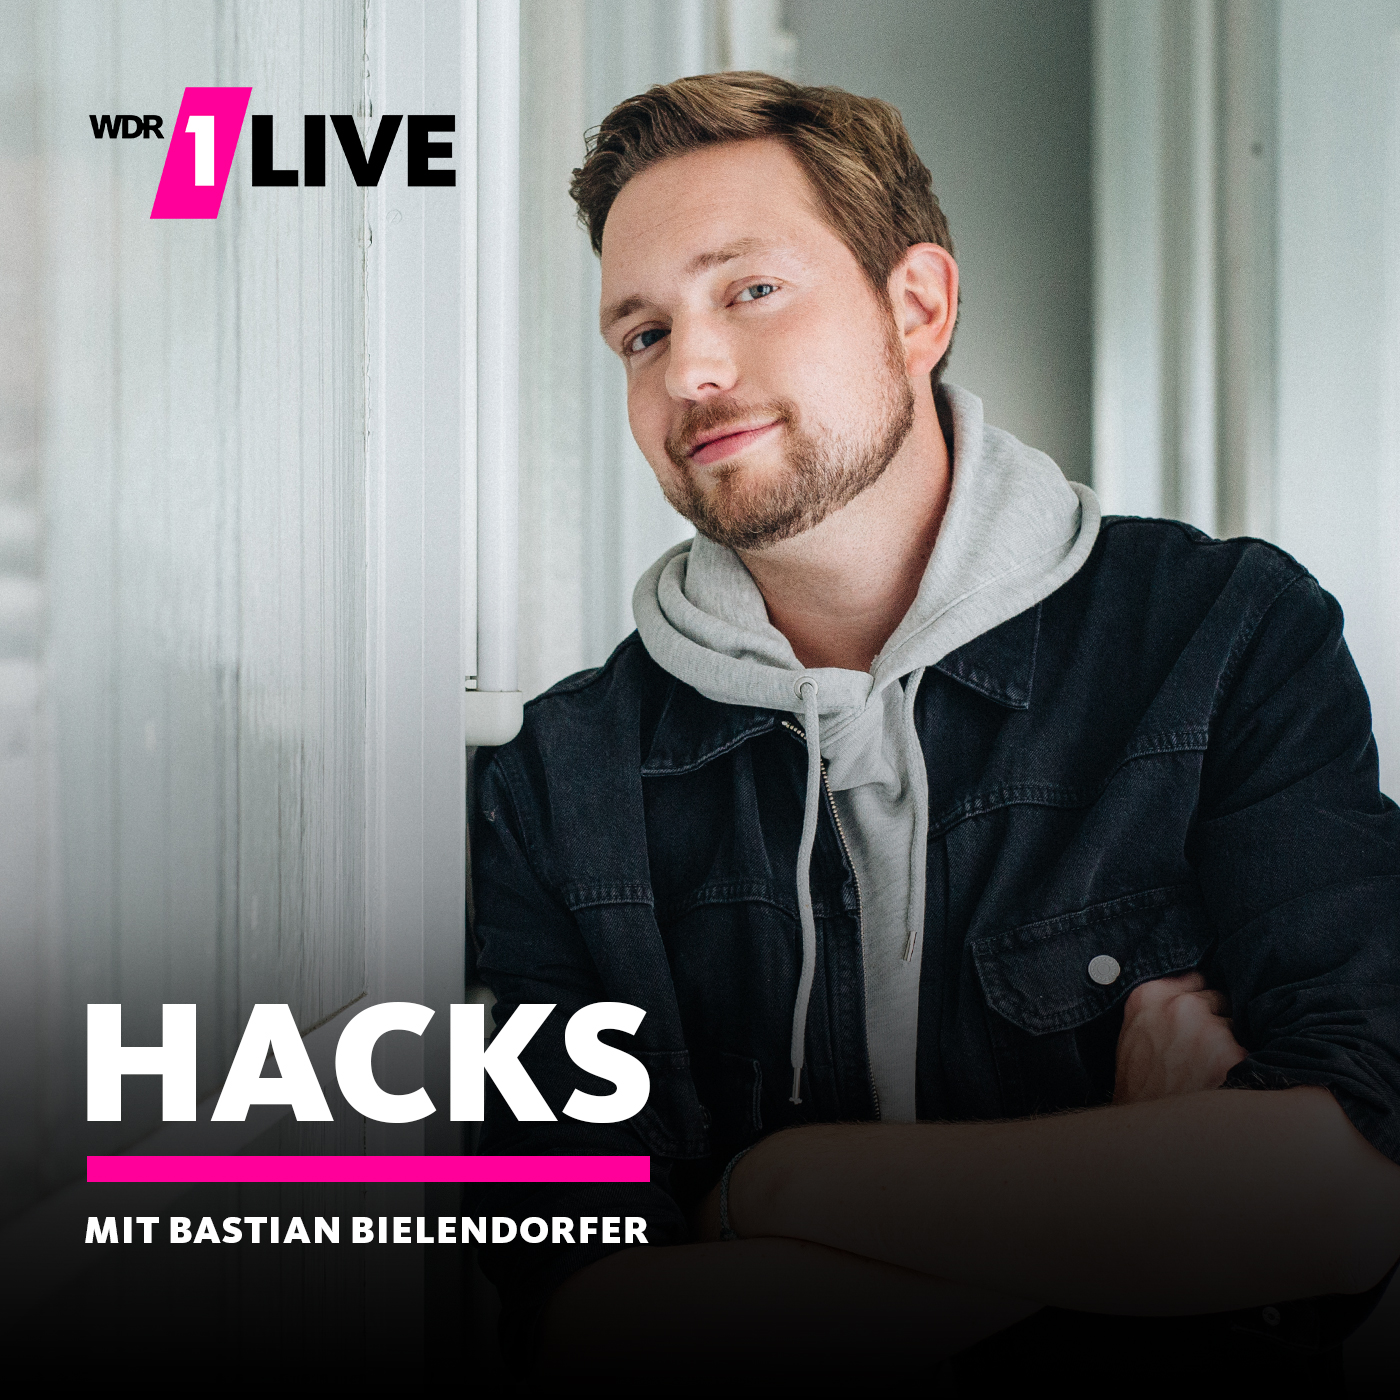 1LIVE Hacks:Westdeutscher Rundfunk